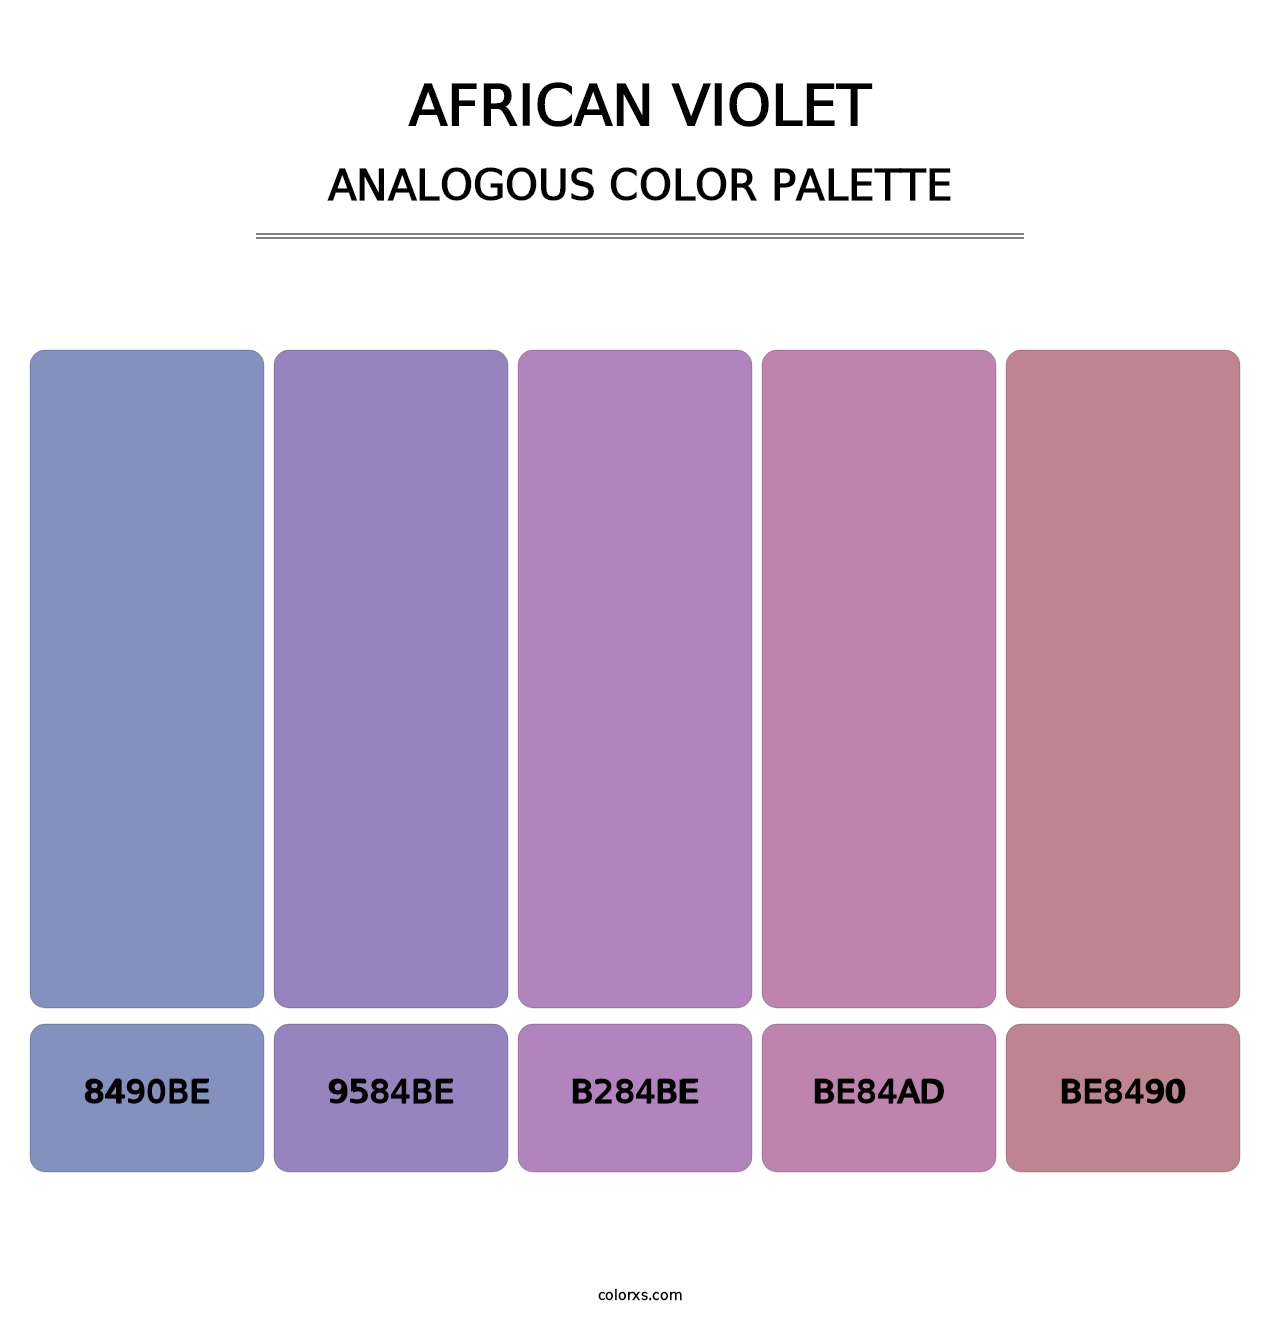 African Violet - Analogous Color Palette